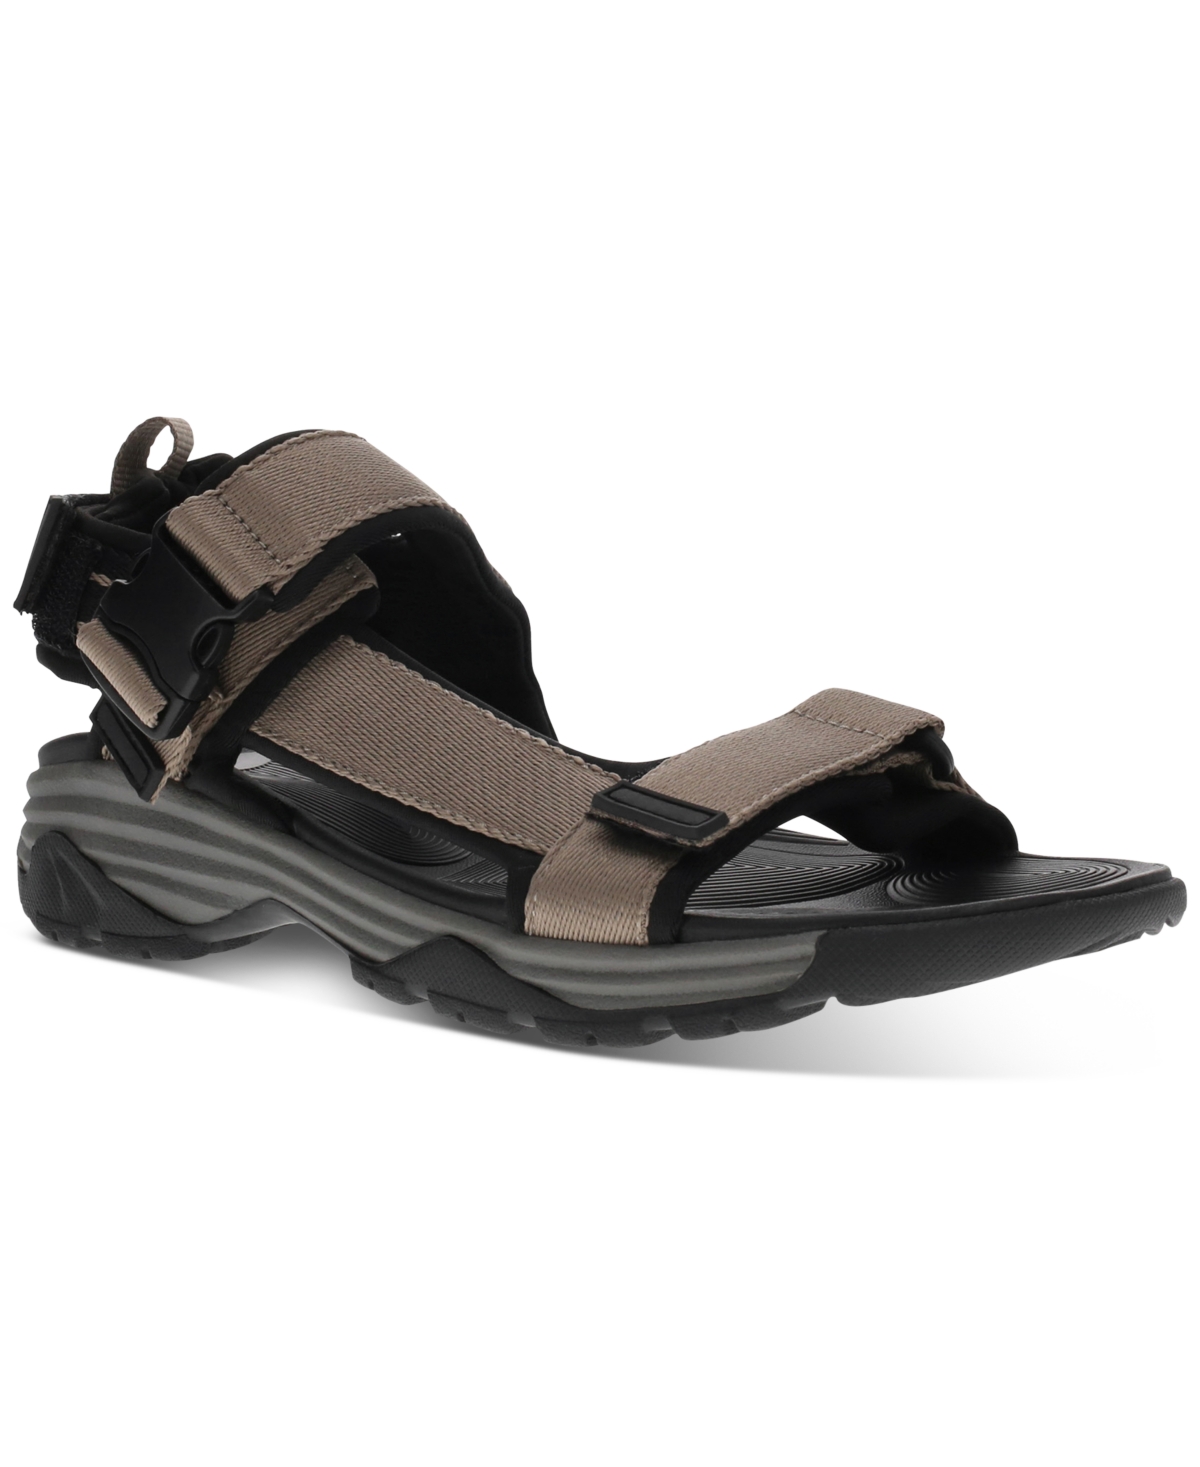 Men's Bradley Sport Sandals - Khaki